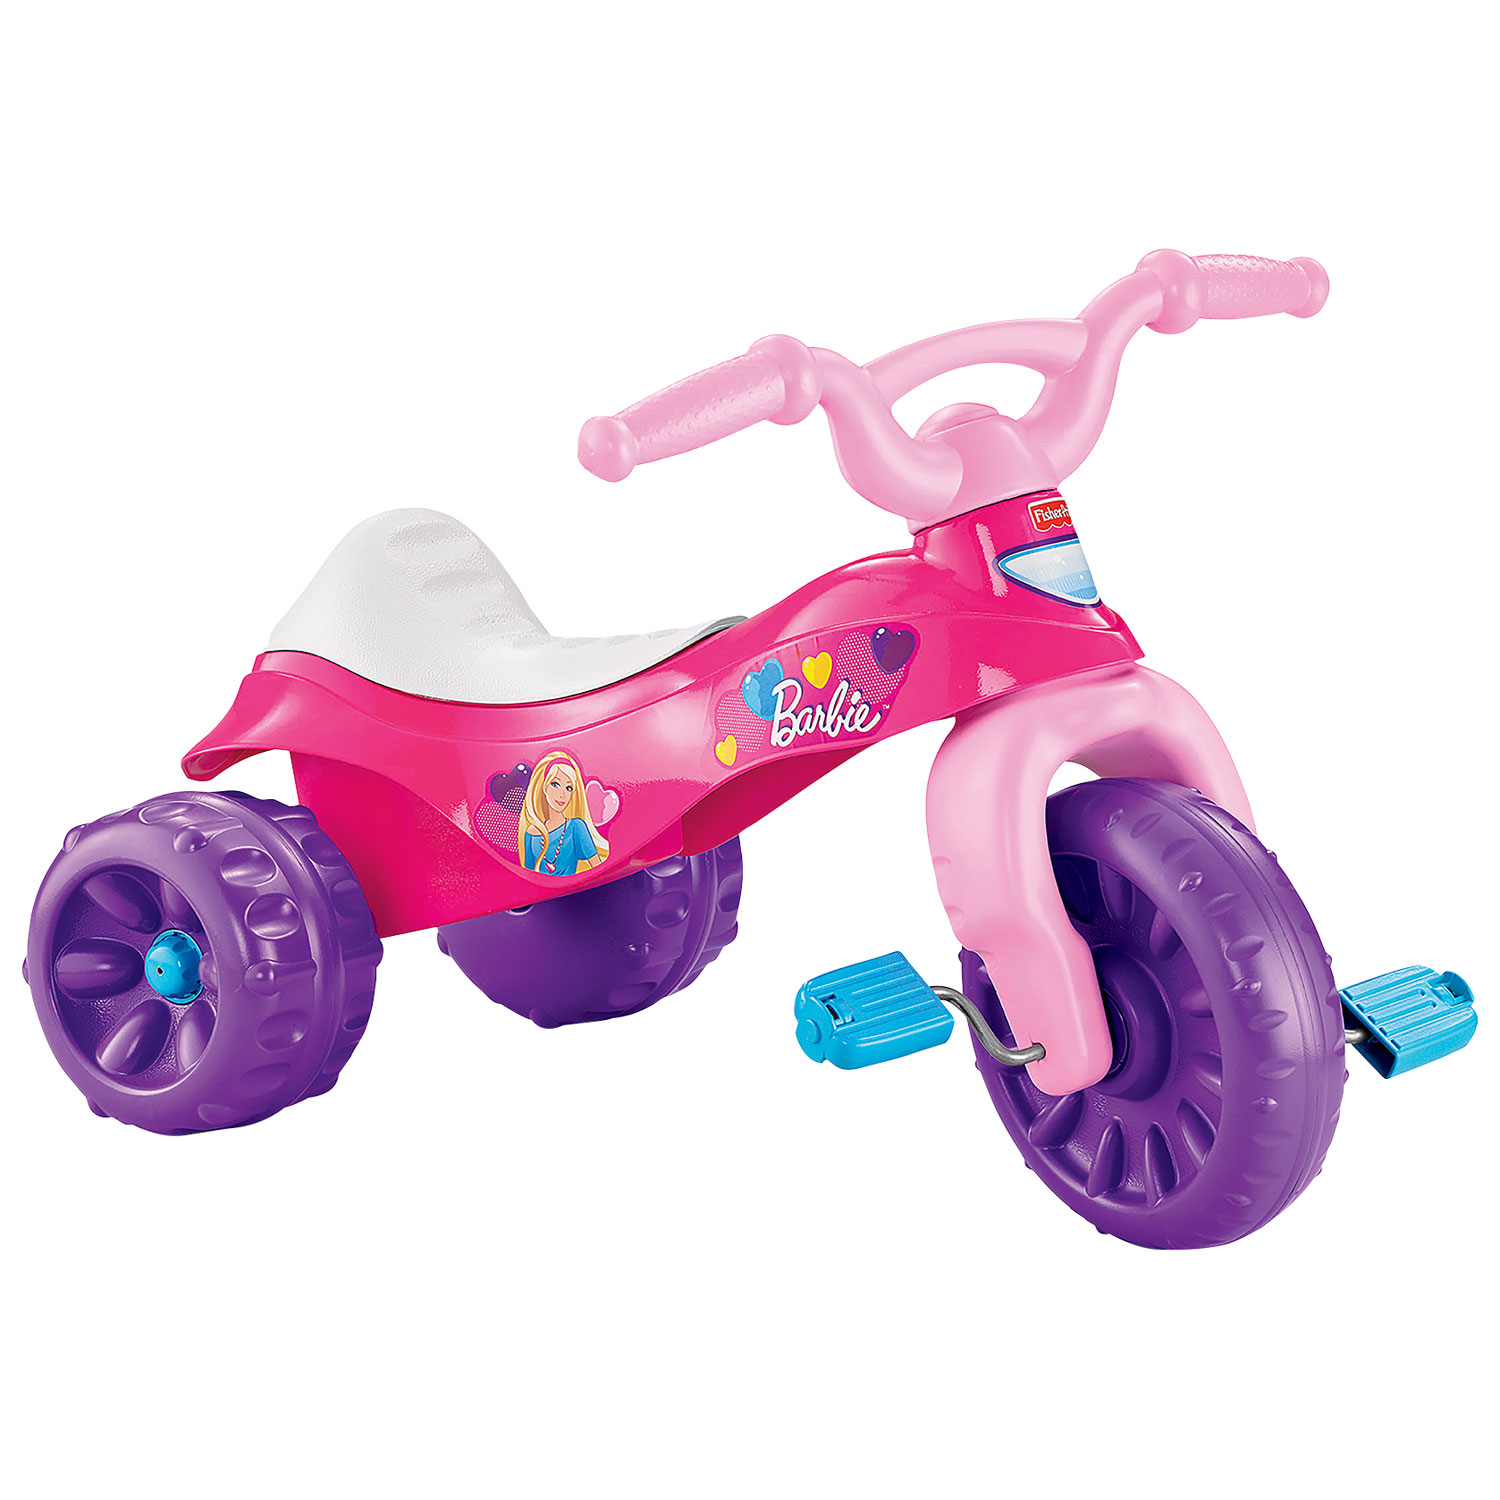 Fisher-Price Barbie Tough Kids Trike - Pink/Purple